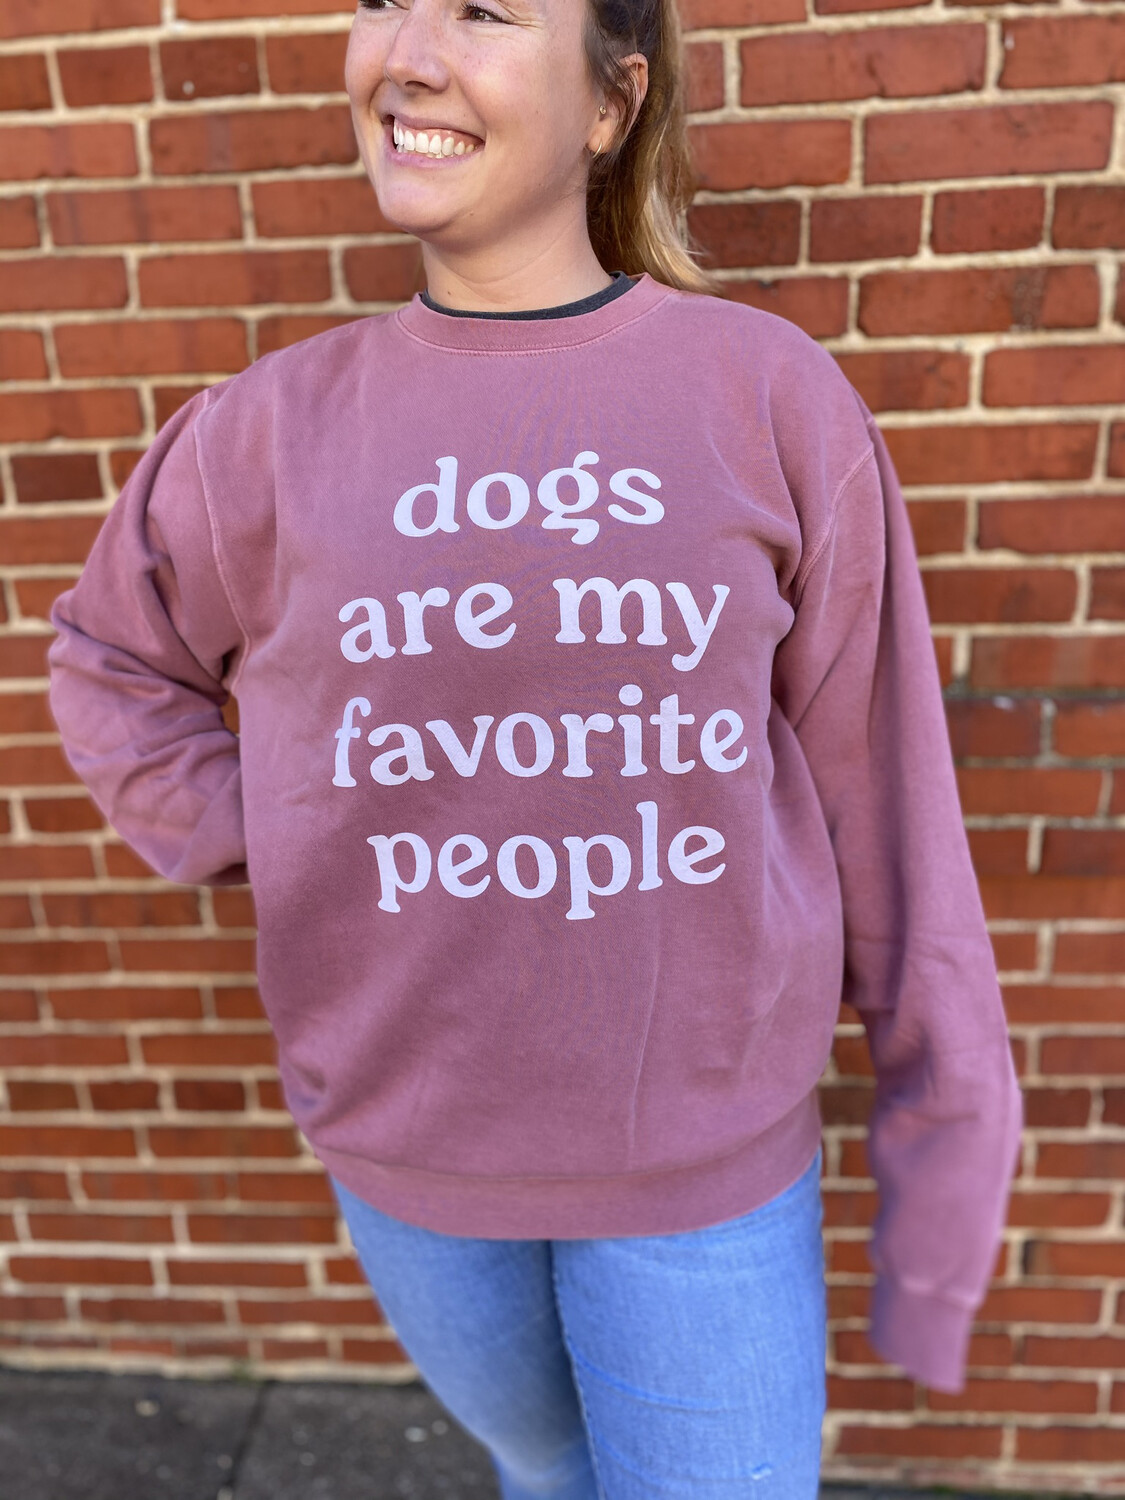 Expression Tees Best Furiend Dog Crewneck Sweatshirt 